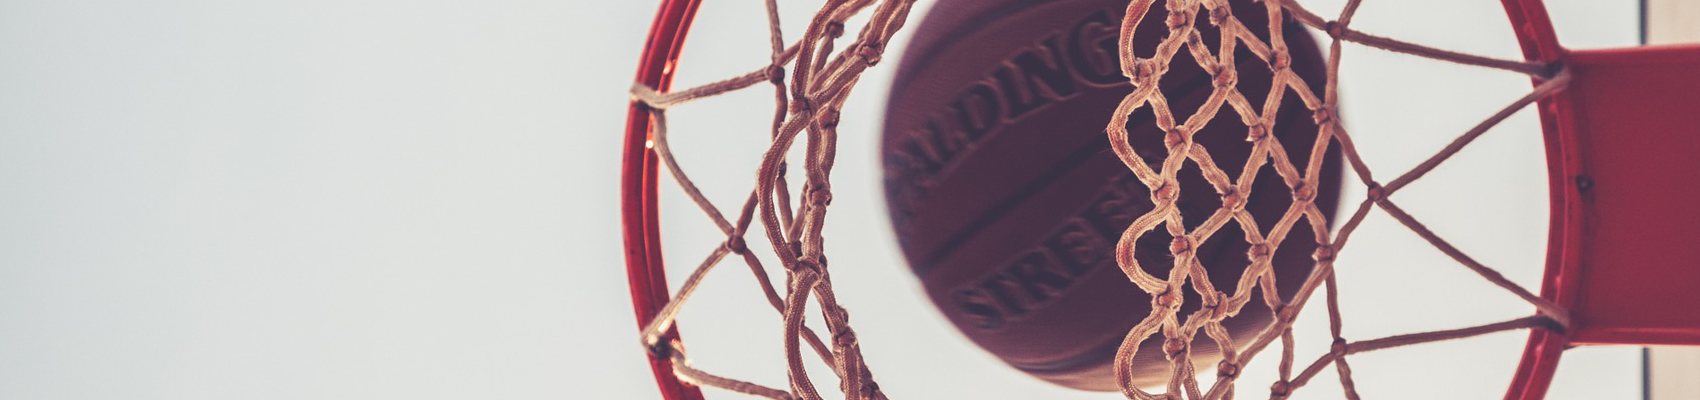 Basketballkorb Bild